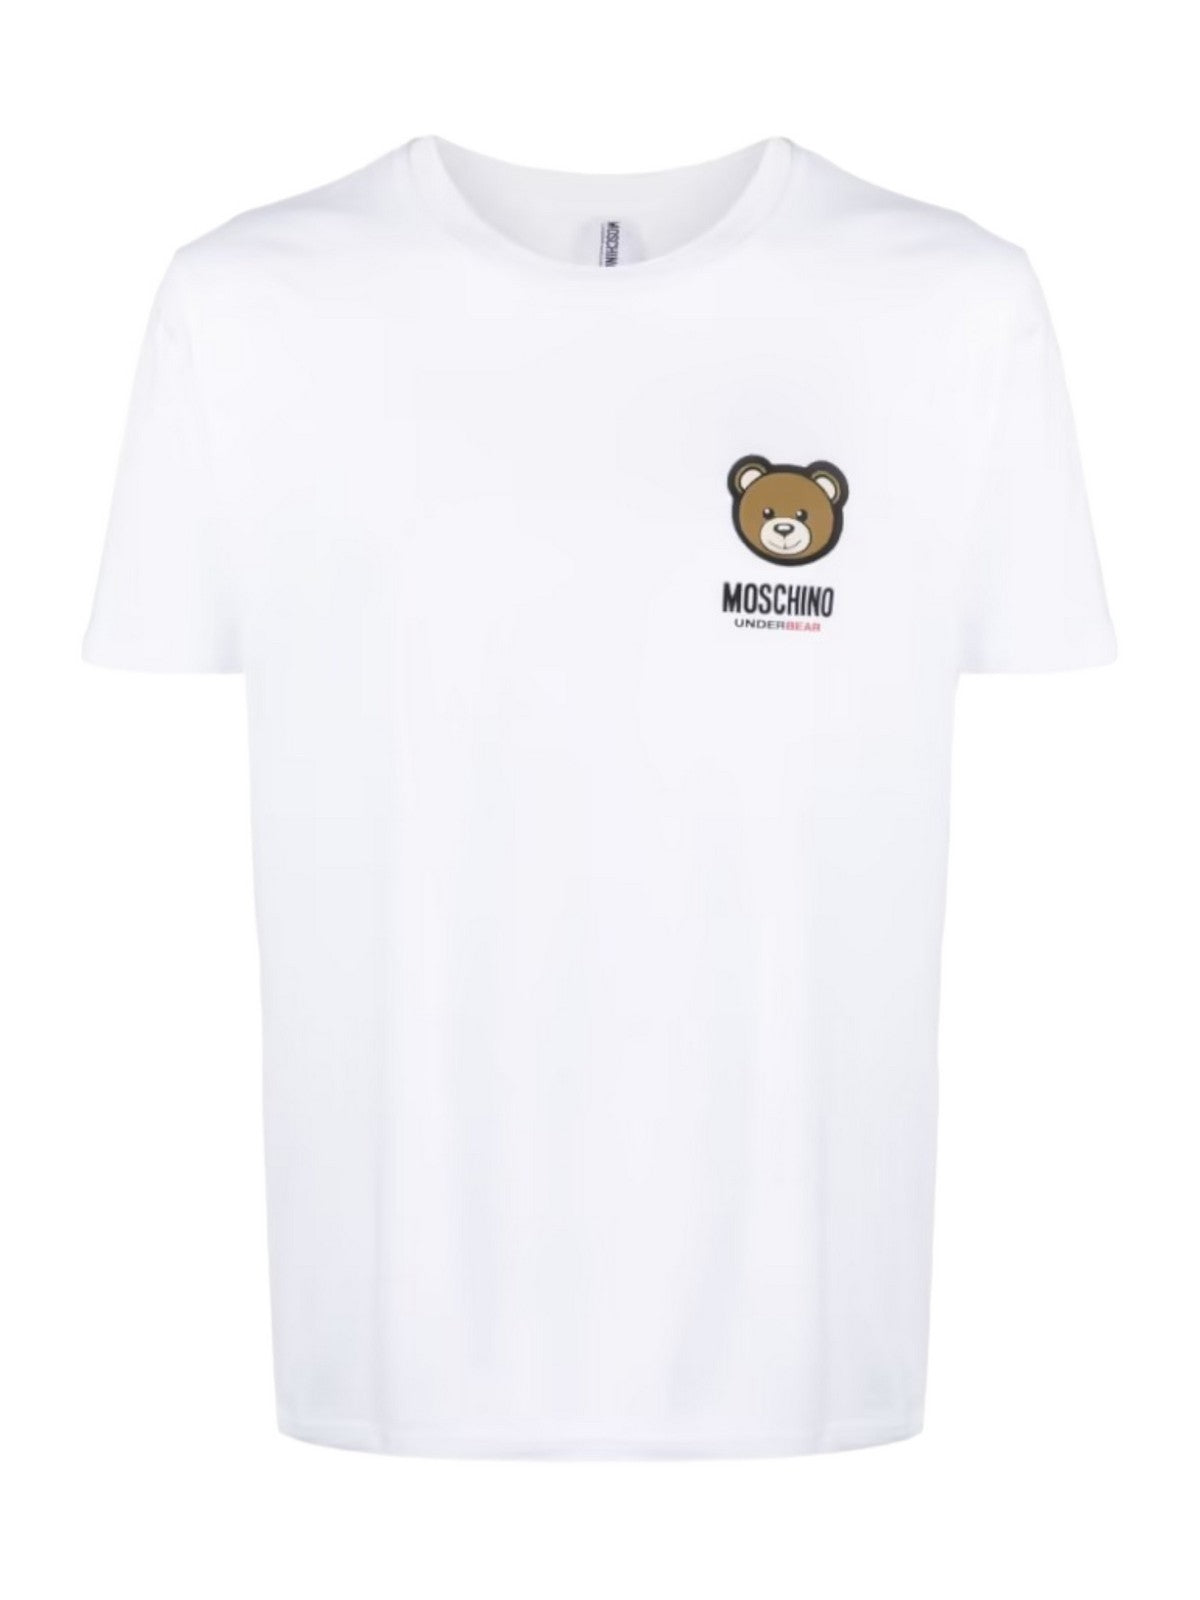 MOSCHINO UNDERWEAR T-Shirt e Polo Uomo  232V1A0788 4410 1 Bianco